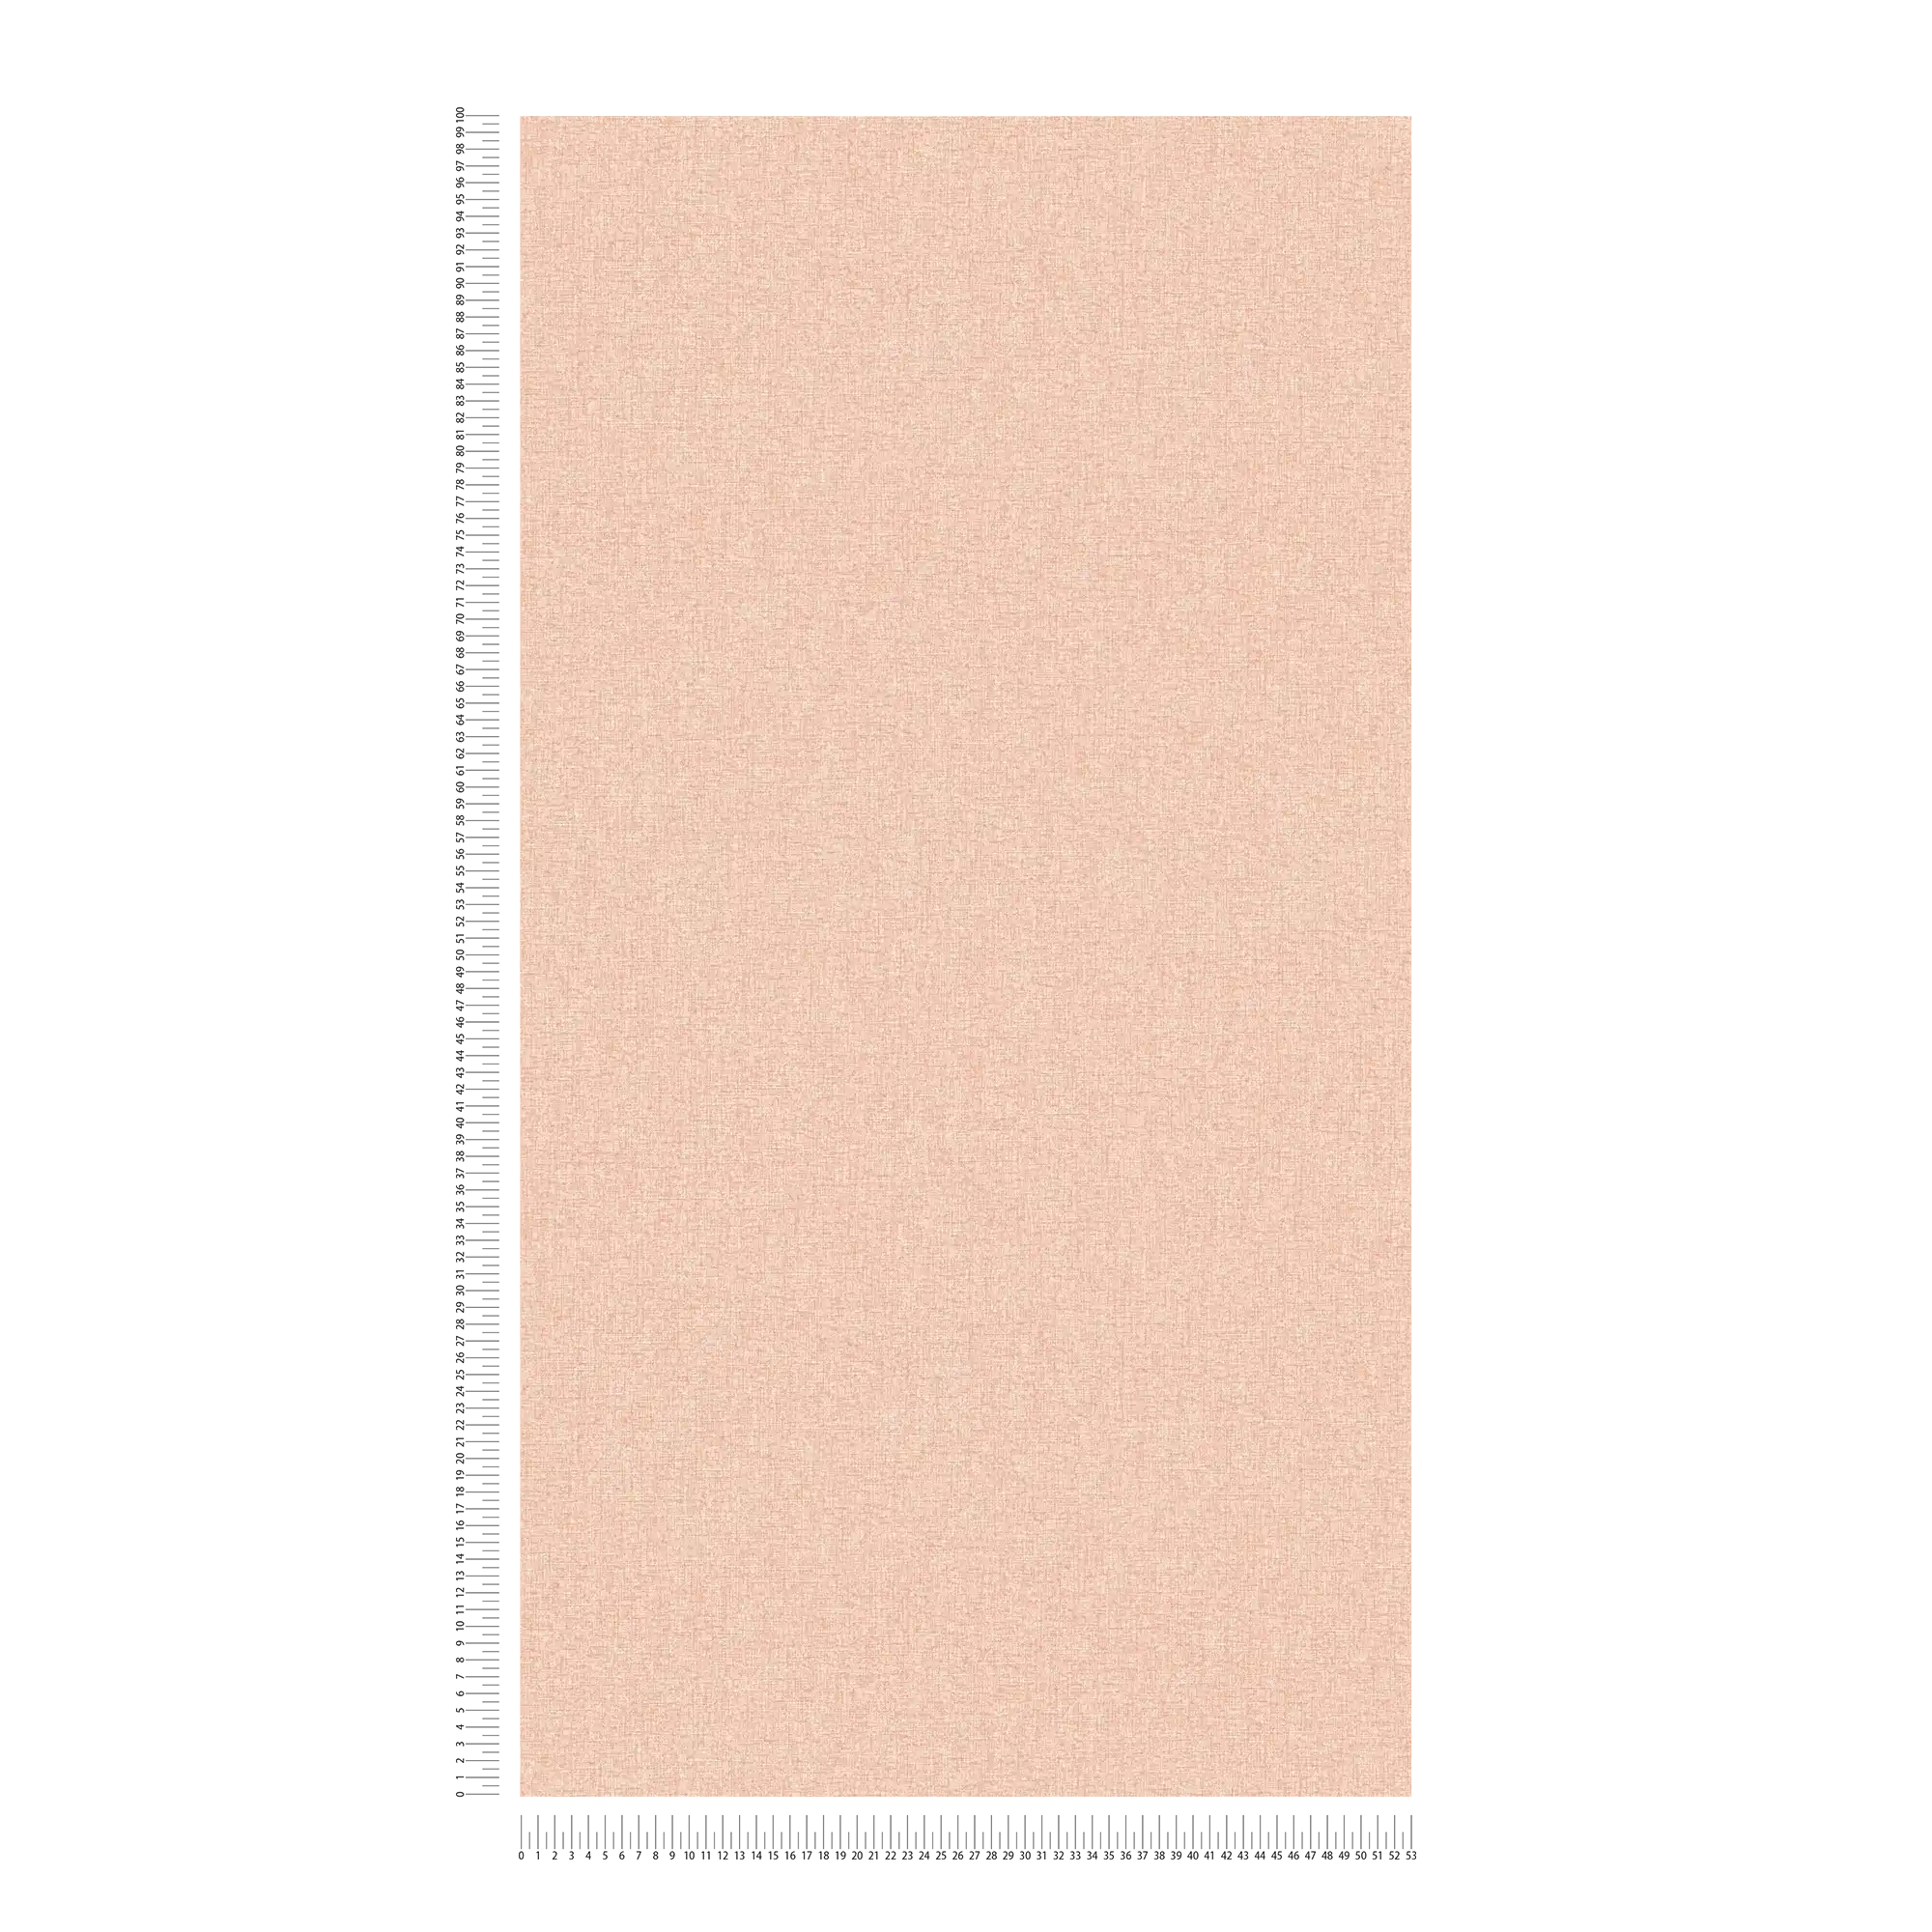             Non-woven wallpaper with textured design plain, matt - orange, pink
        